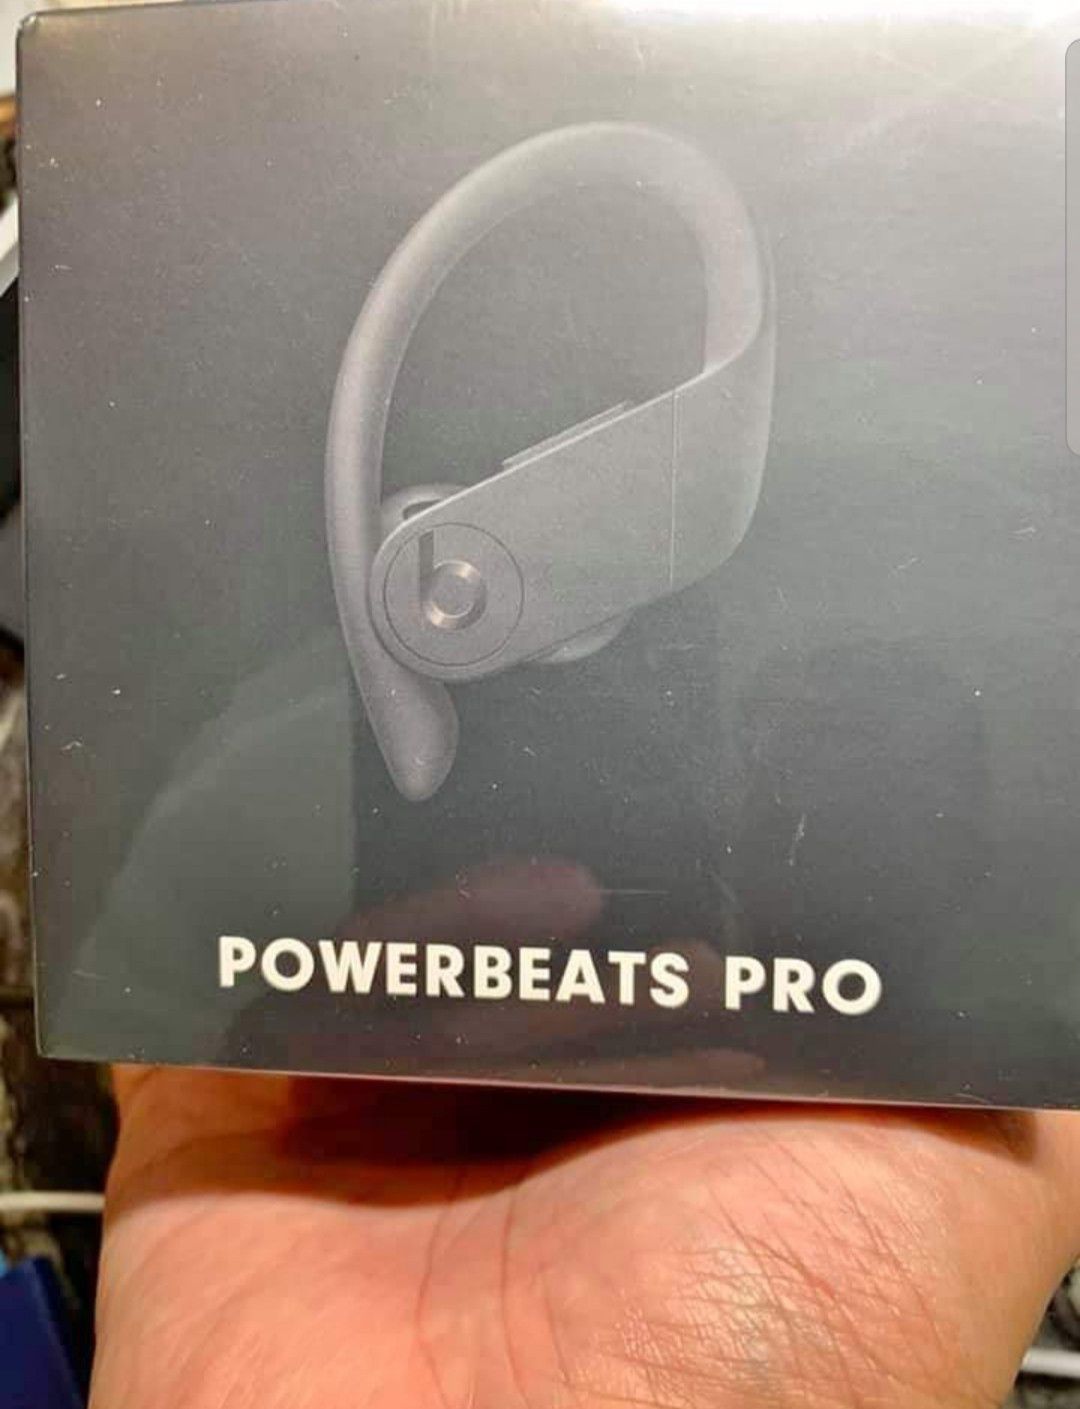 Power beats pro